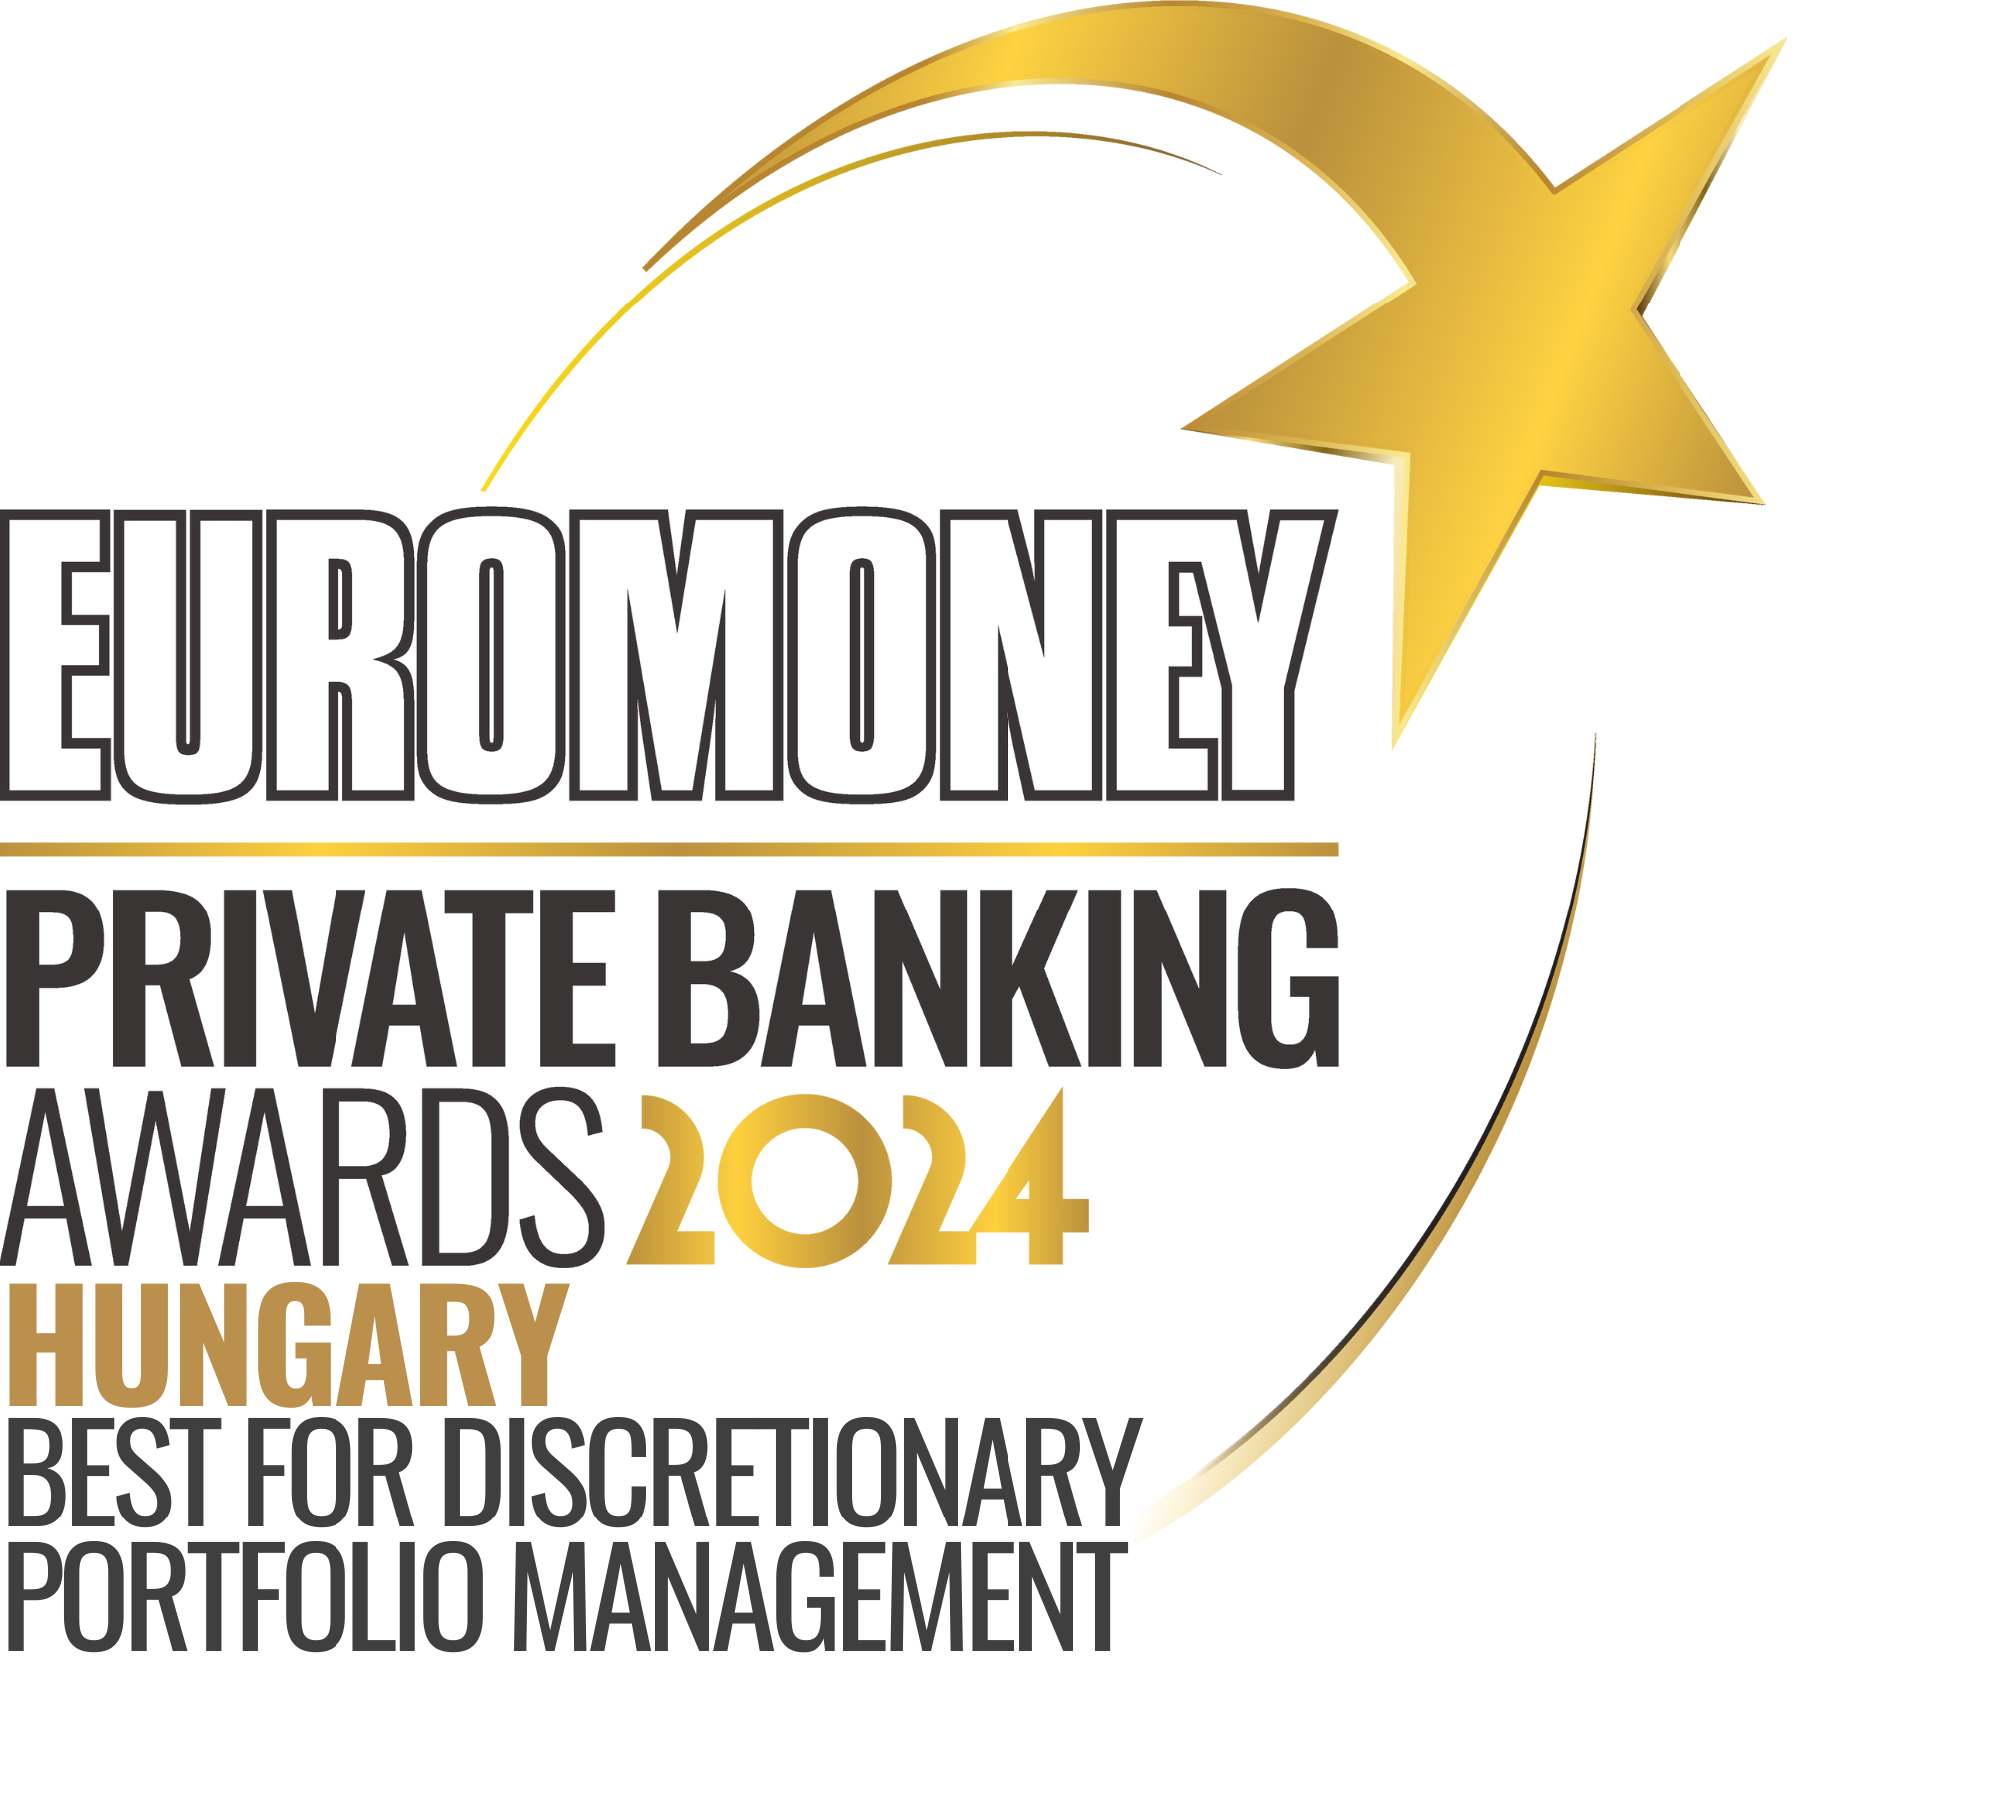 PB24_Hungary _Best for Discretionary Portfolio Management